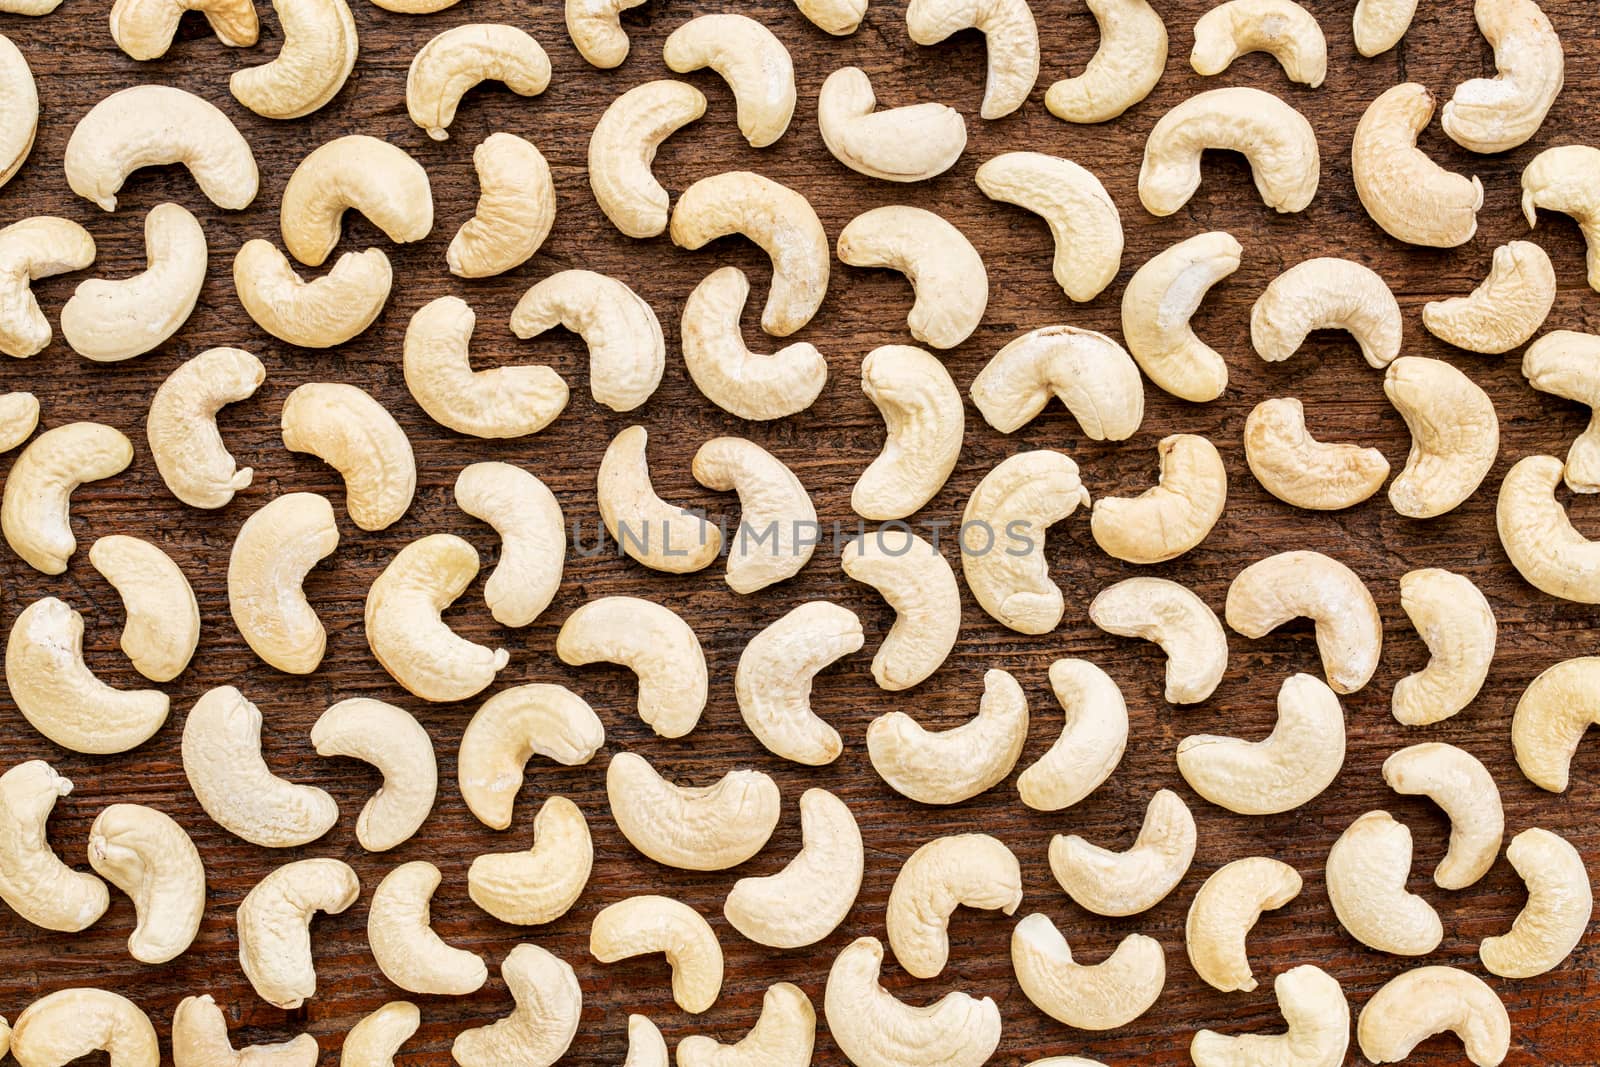 cashew nuts on rustic wood by PixelsAway